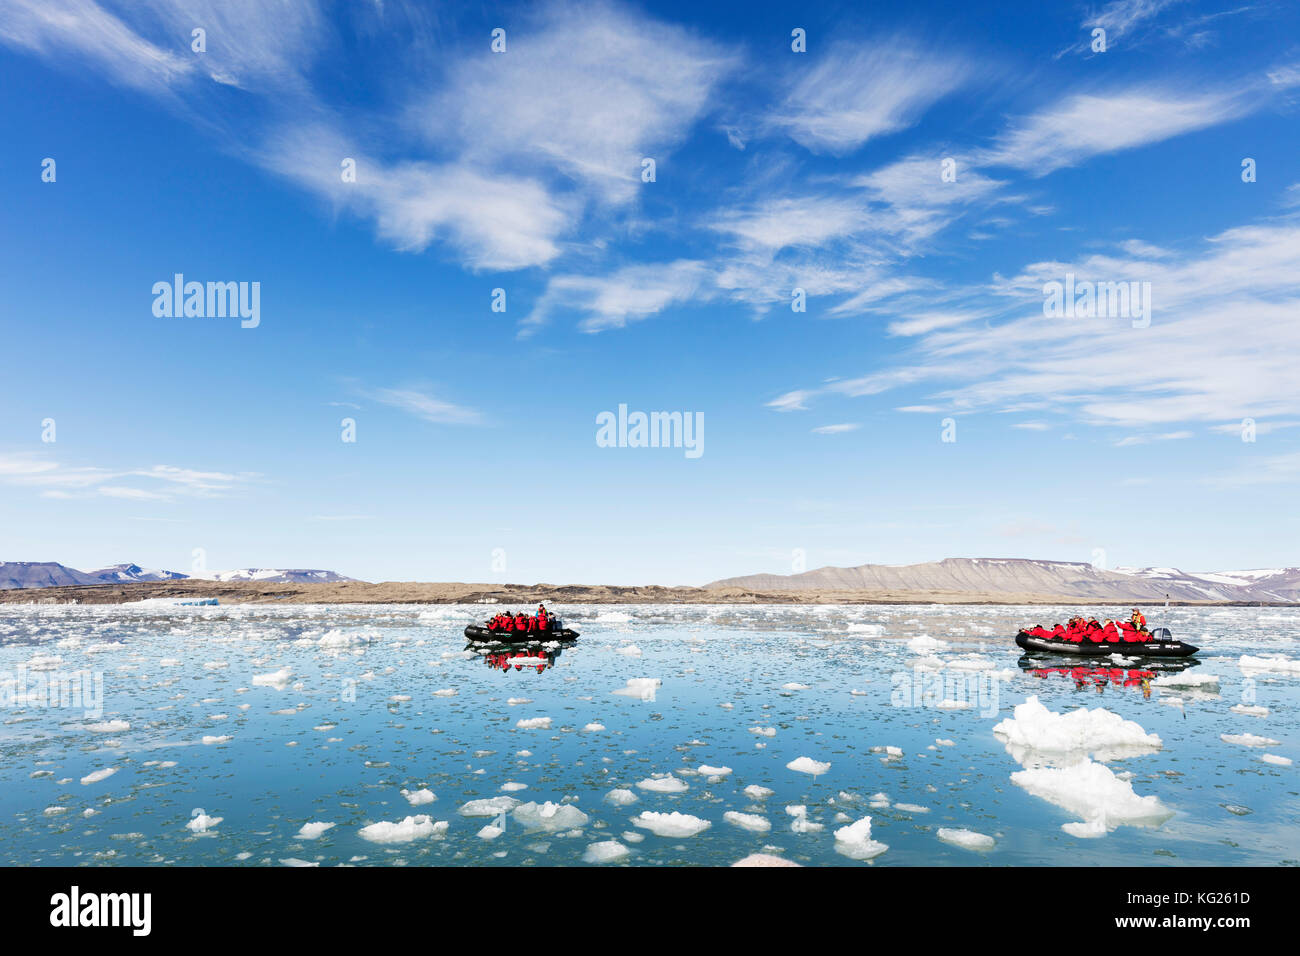 Tourist zodiac in an iceberg filled glacial lagoon, Spitsbergen, Svalbard, Arctic, Norway, Europe Stock Photo